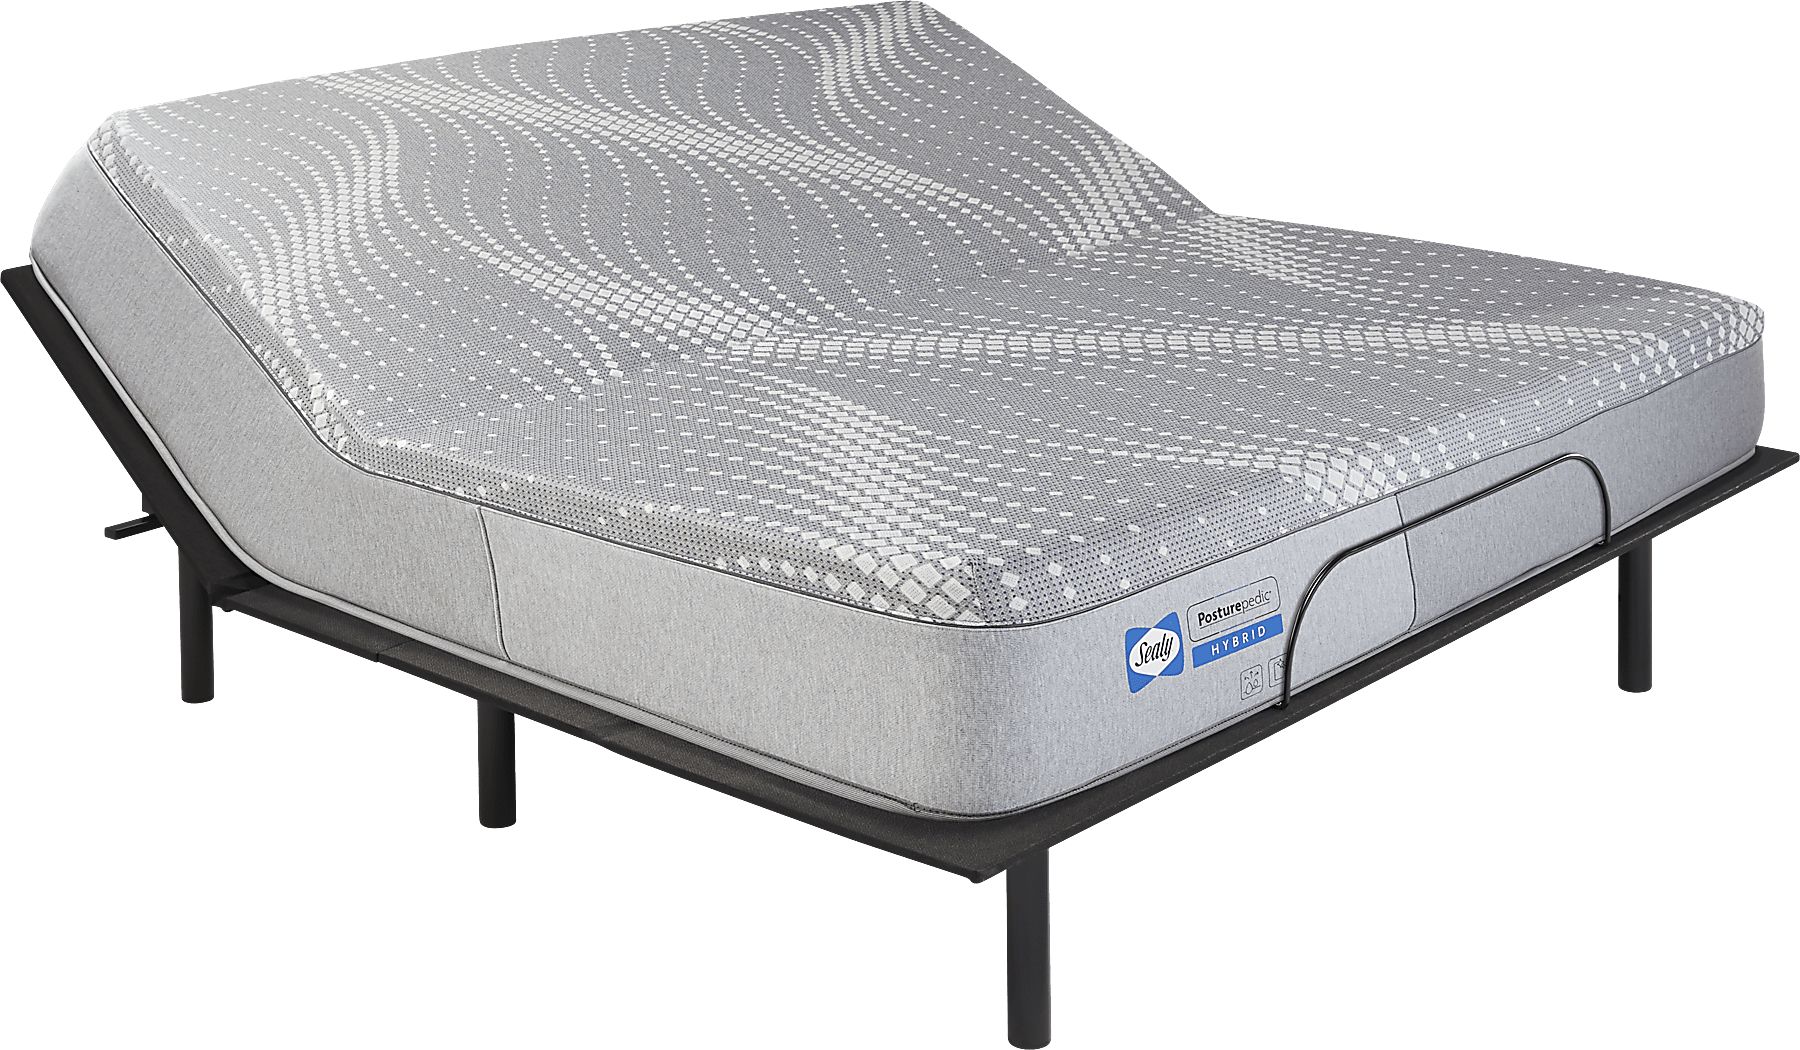 sealy barret court mattress